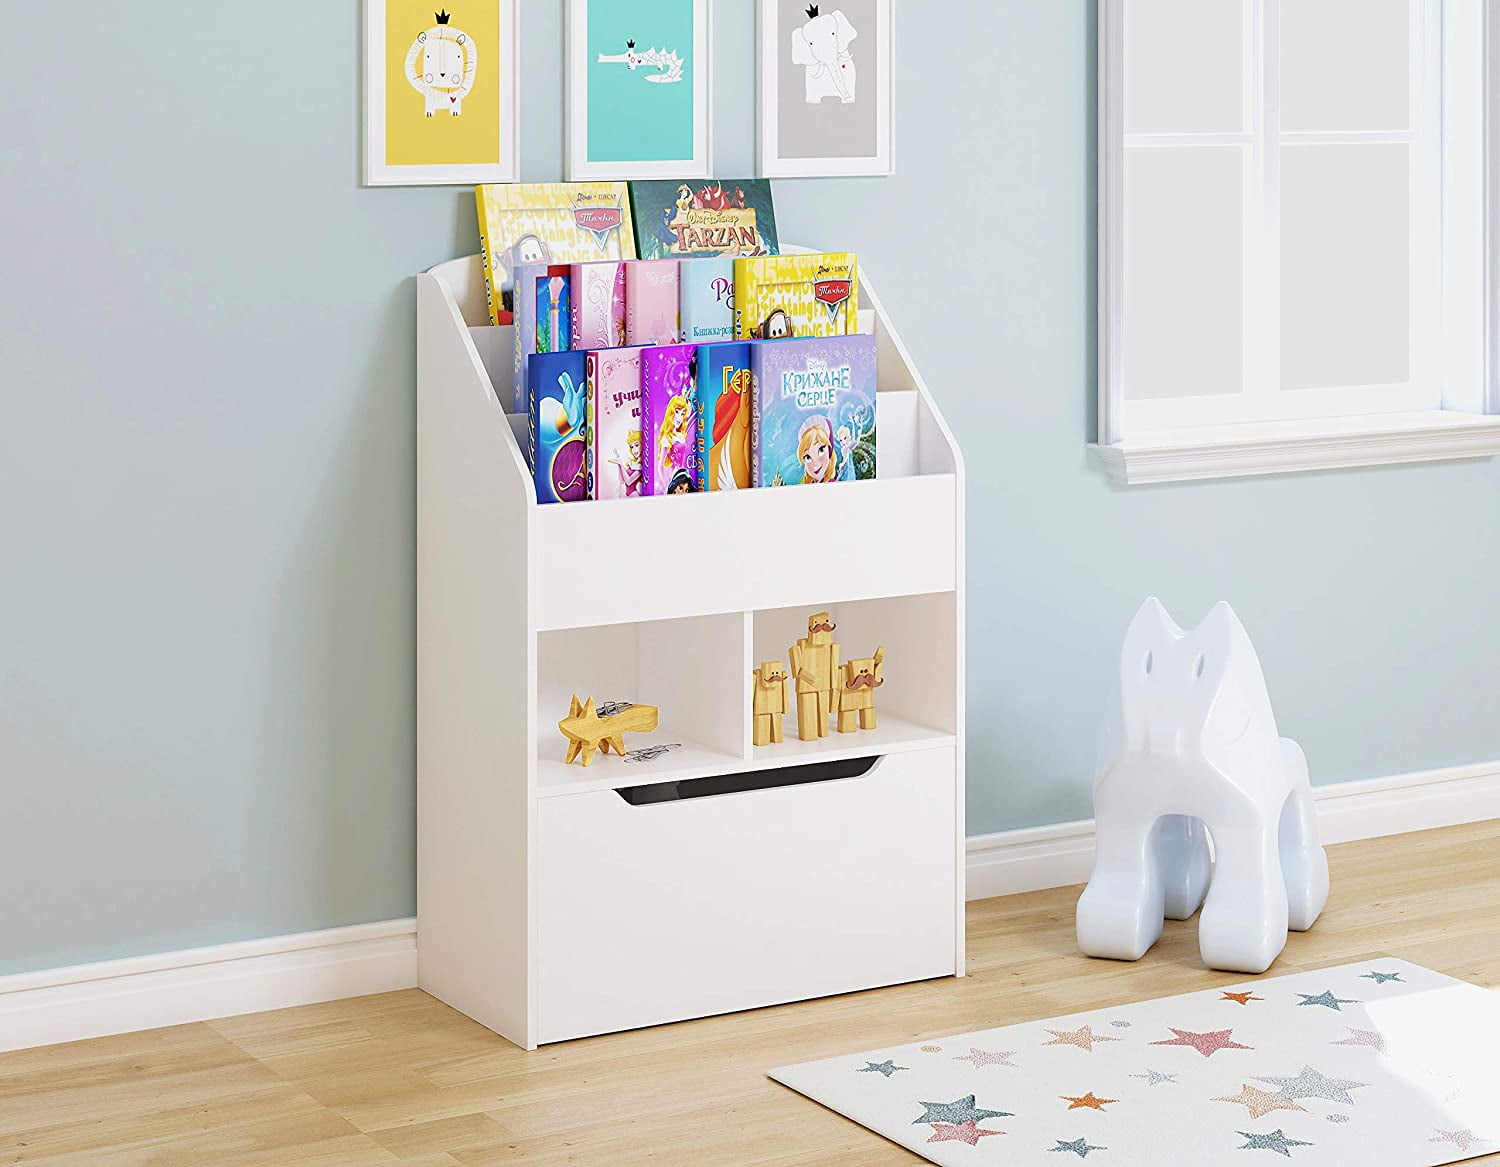 Utex Kid S Bookshelf Toy And Book, Wooden Toy Storage Shelf